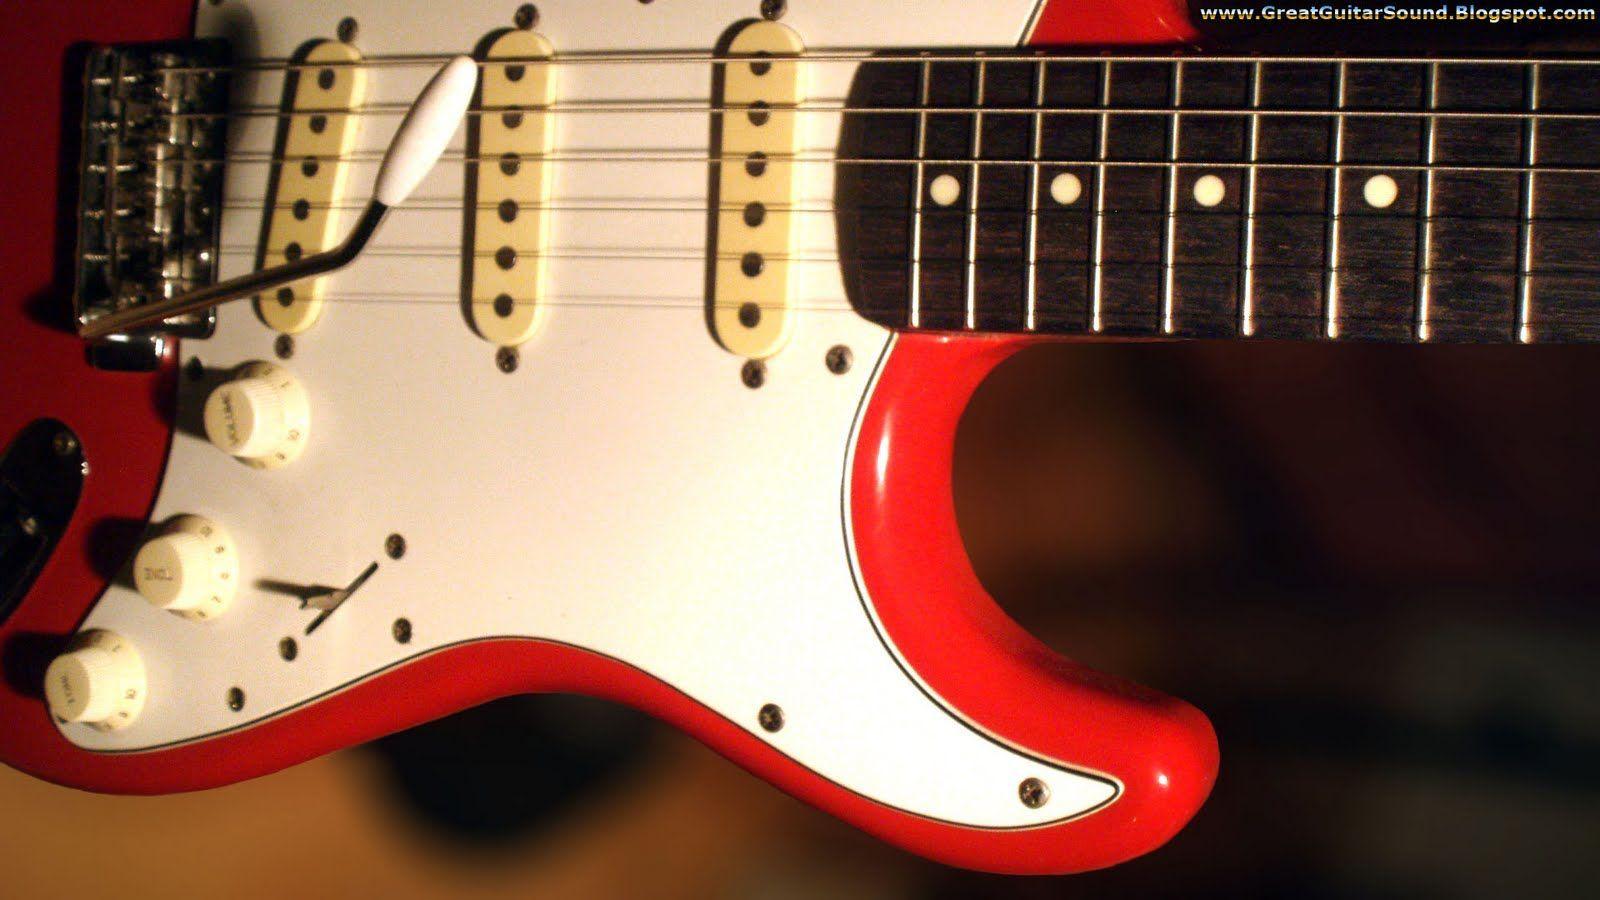 Fender Stratocaster Guitar Wallpapers - Wallpaper Cave